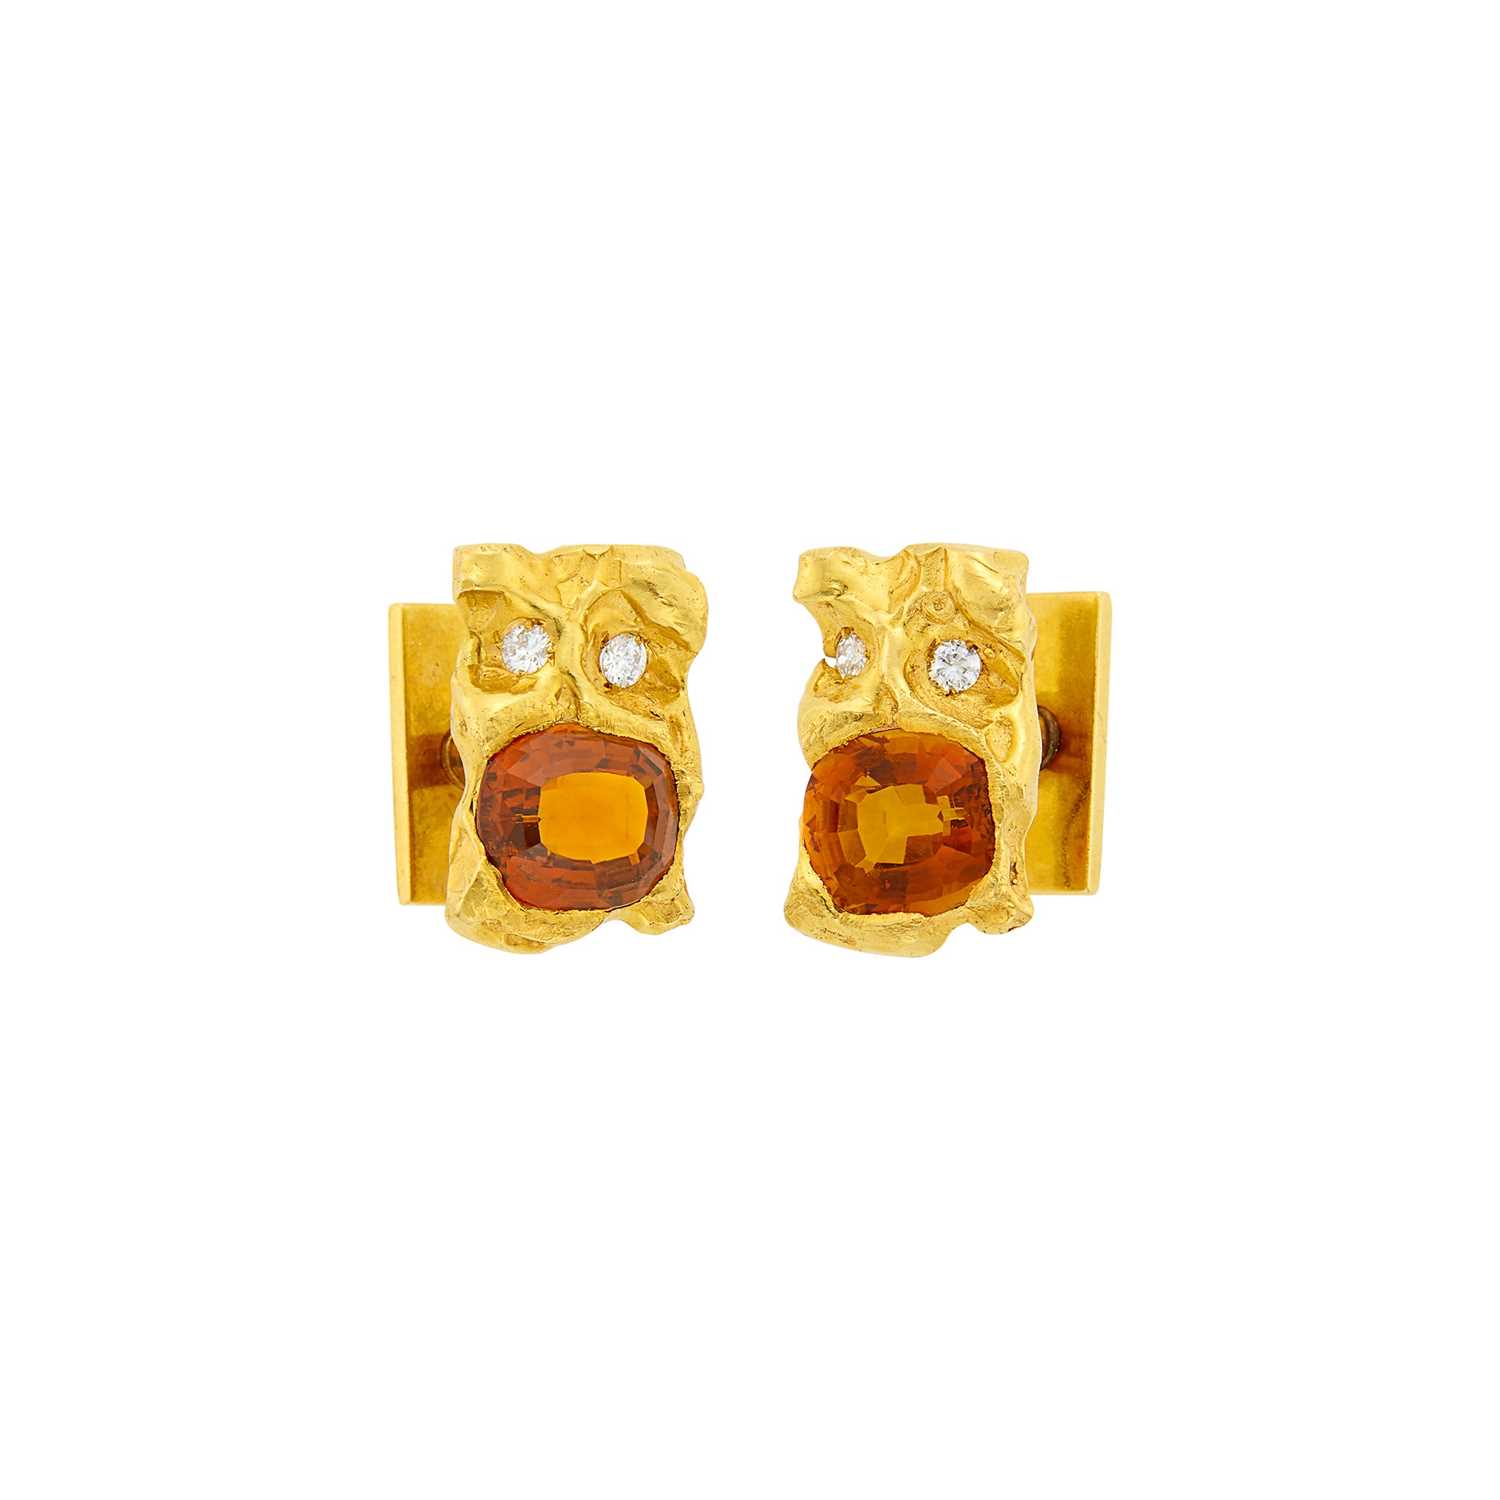 Lot 39 - Ruser Pair of Gold, Citrine and Diamond Cufflinks